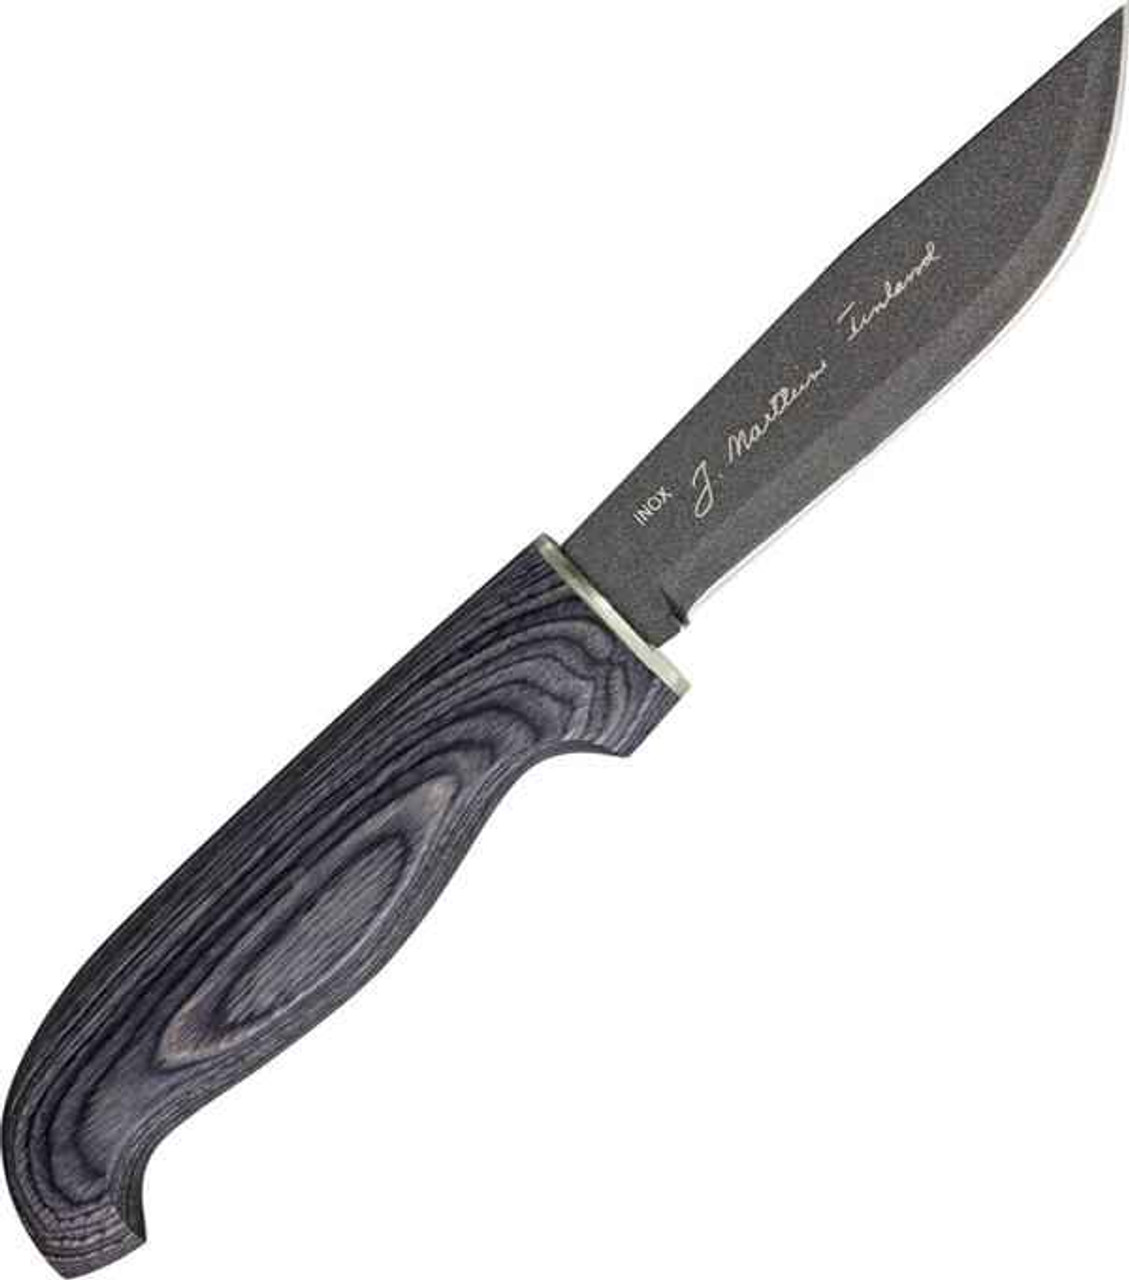 Marttiini Skinner. 9" overall. 4 1/4" stainless blade with black Teflon, finish.